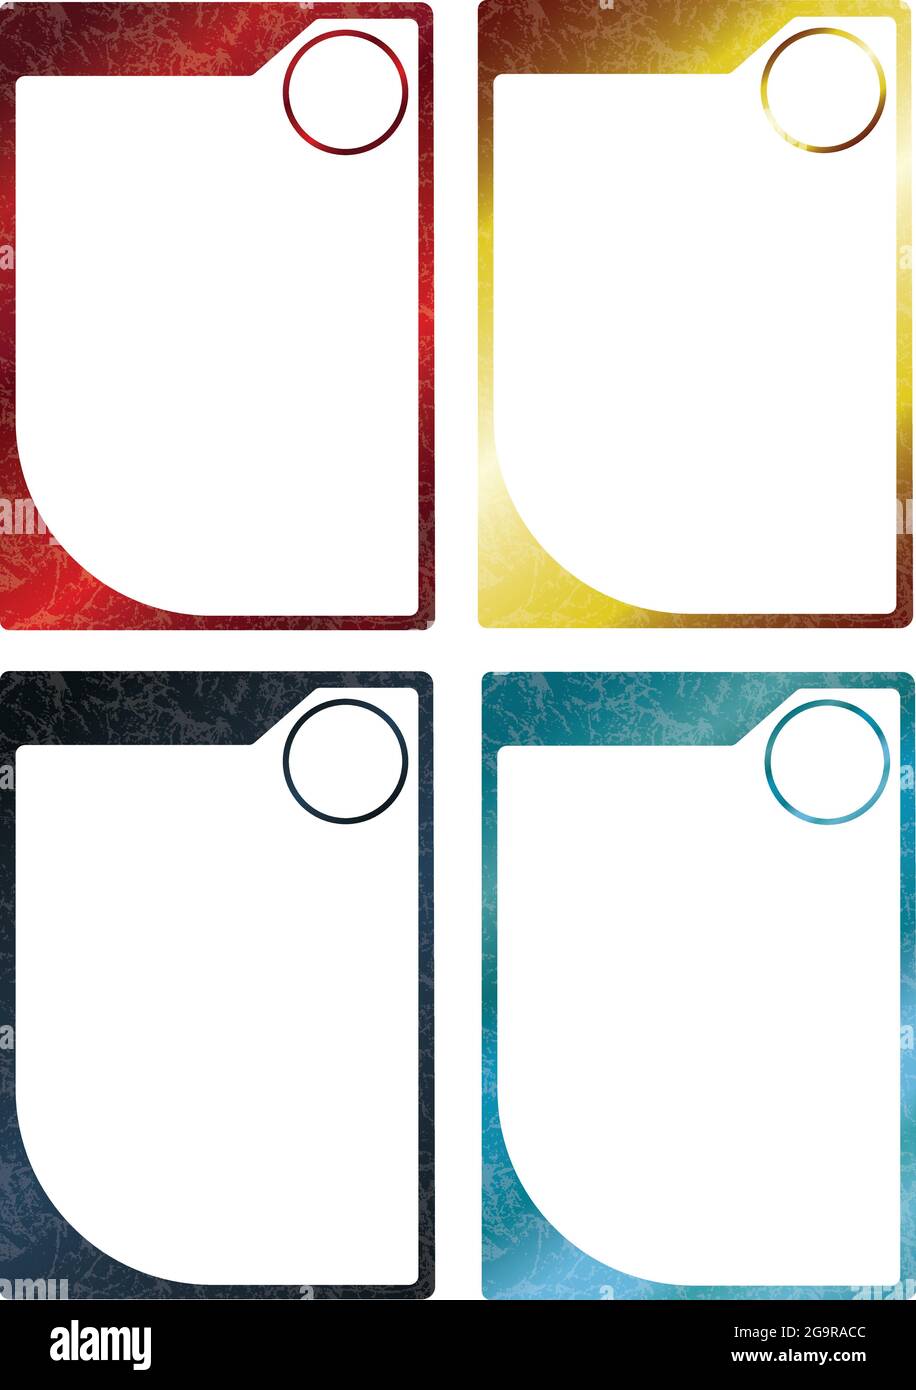 grunge textured card frame border template design flyer Stock Vector